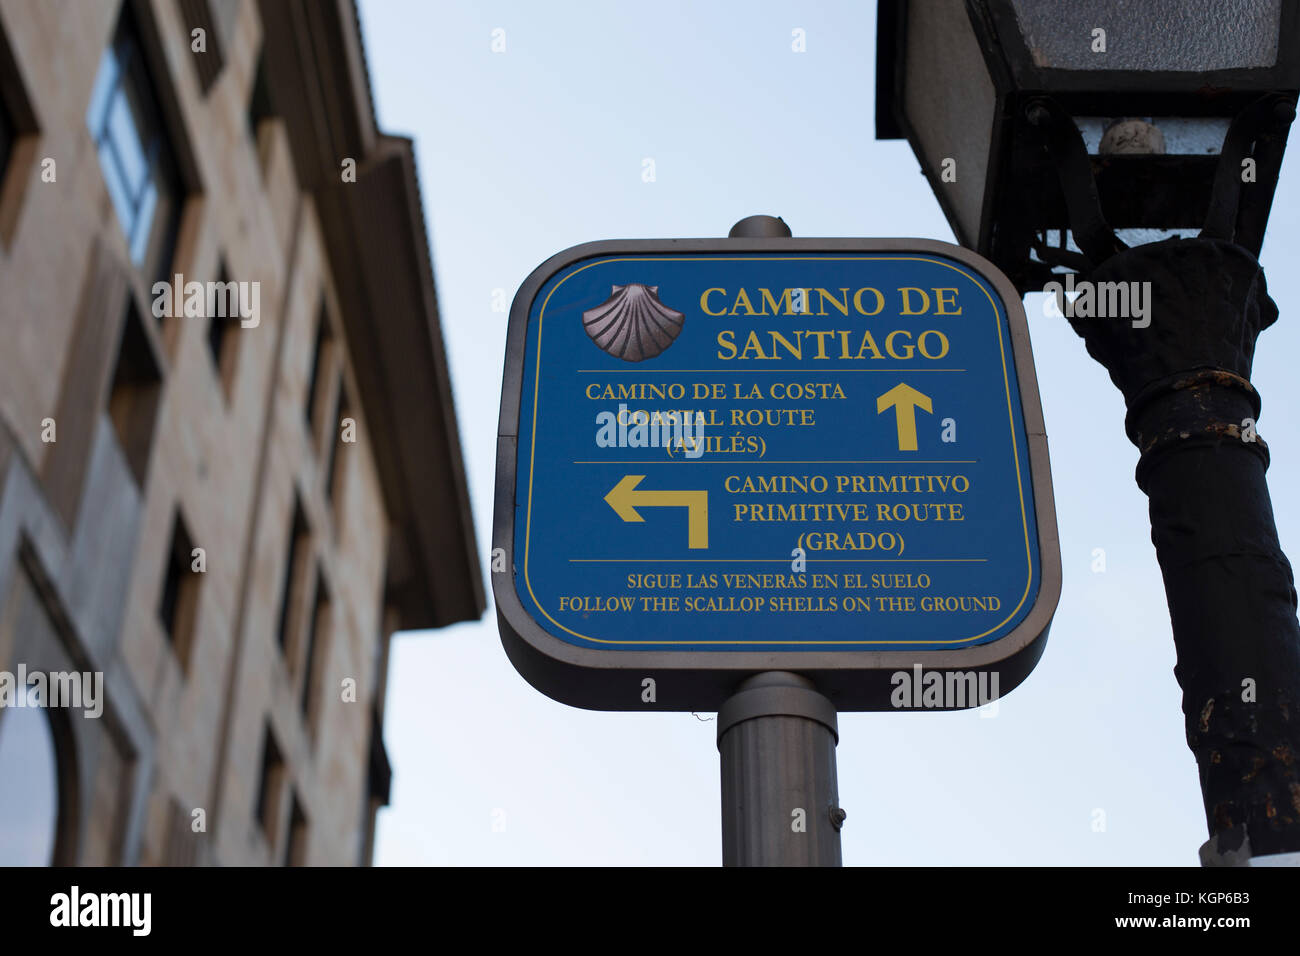 Way of Saint James to Santiago de Compostela marker in spanish language Stock Photo